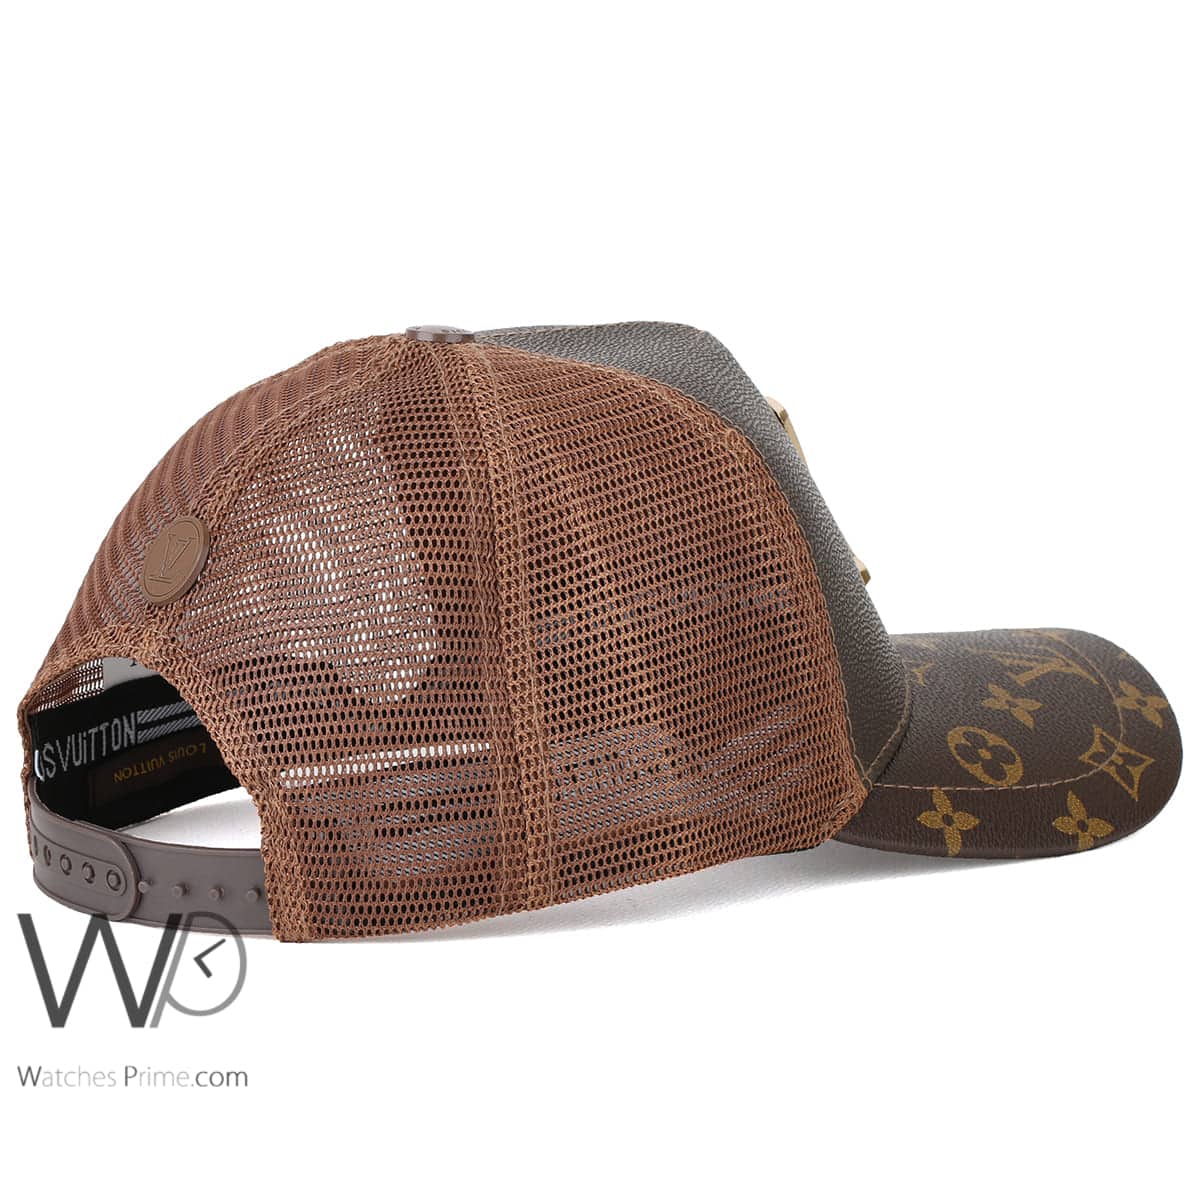 Louis Vuitton LV brown baseball cap men, Watches Prime, Watches Prime